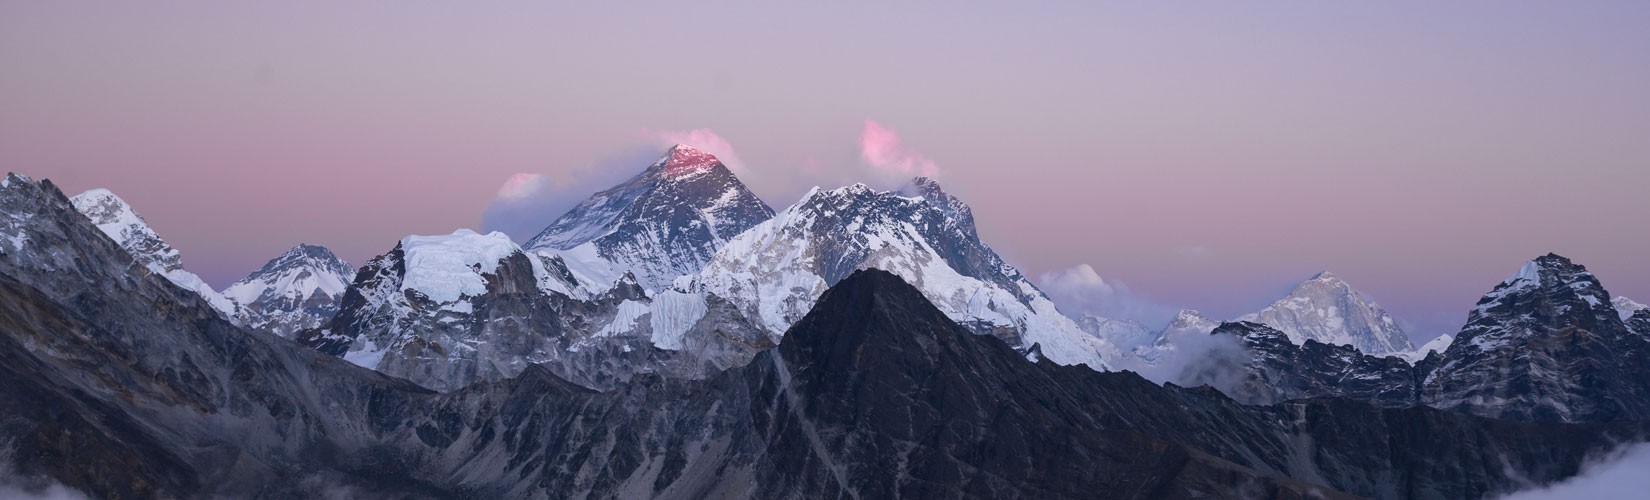 International Mt. Everest Day